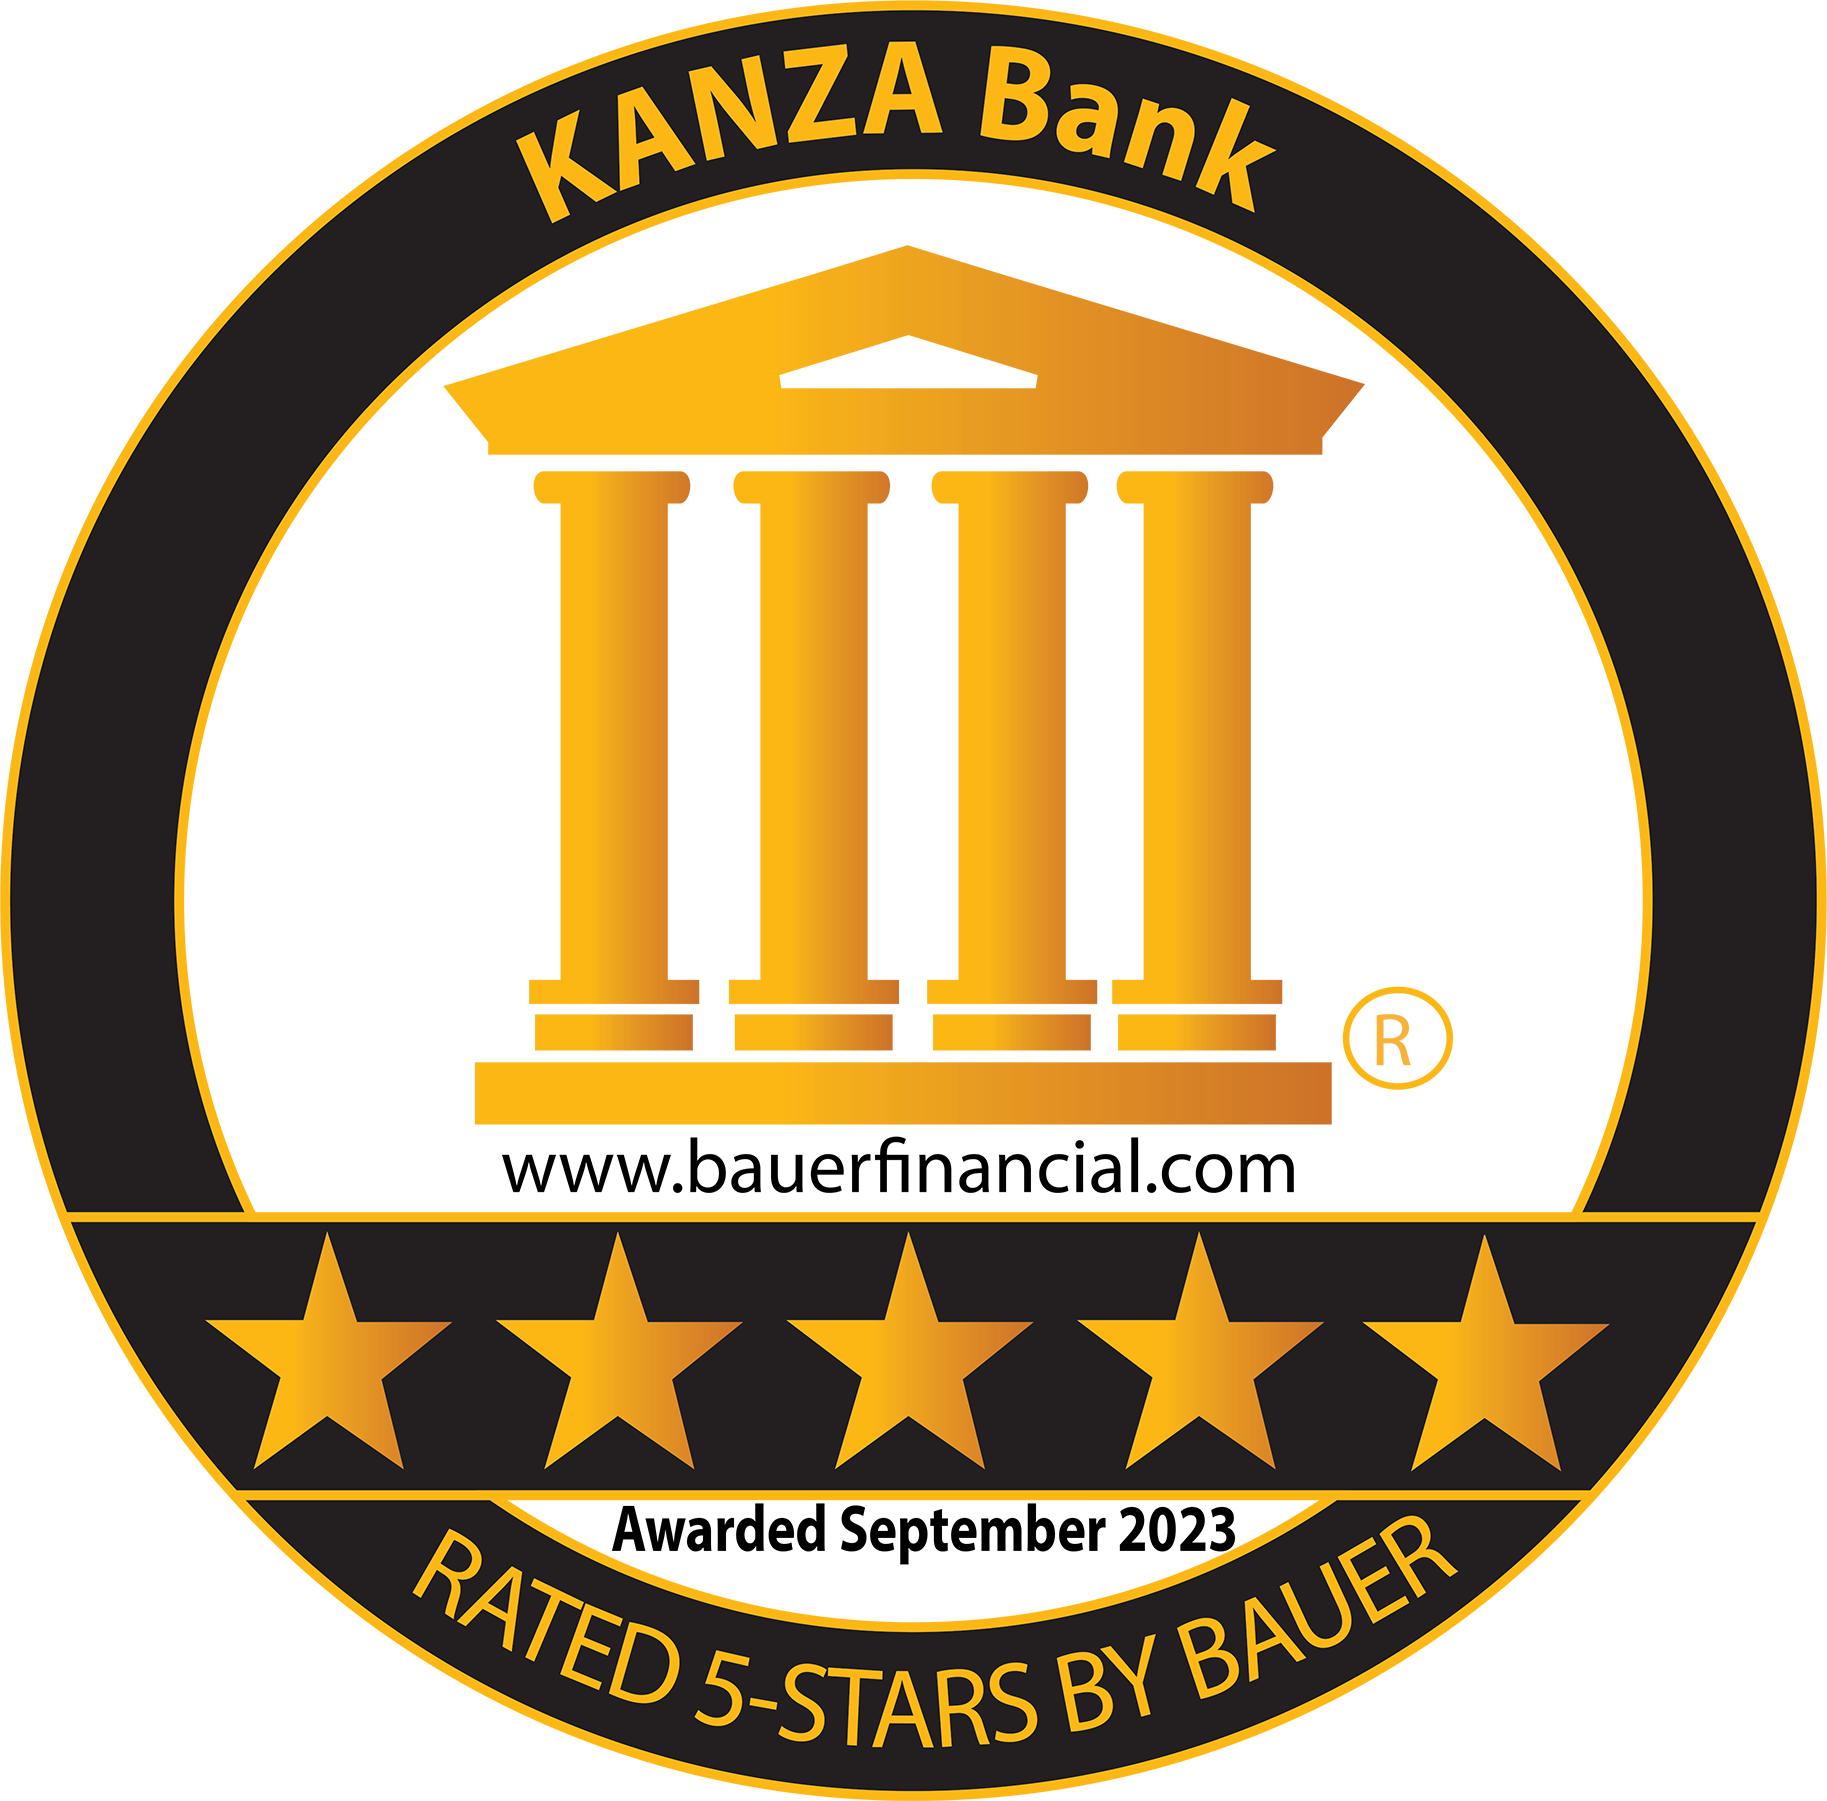 KANZA Bank Earns 5-Star Rating from Bauer Financial - Main Image